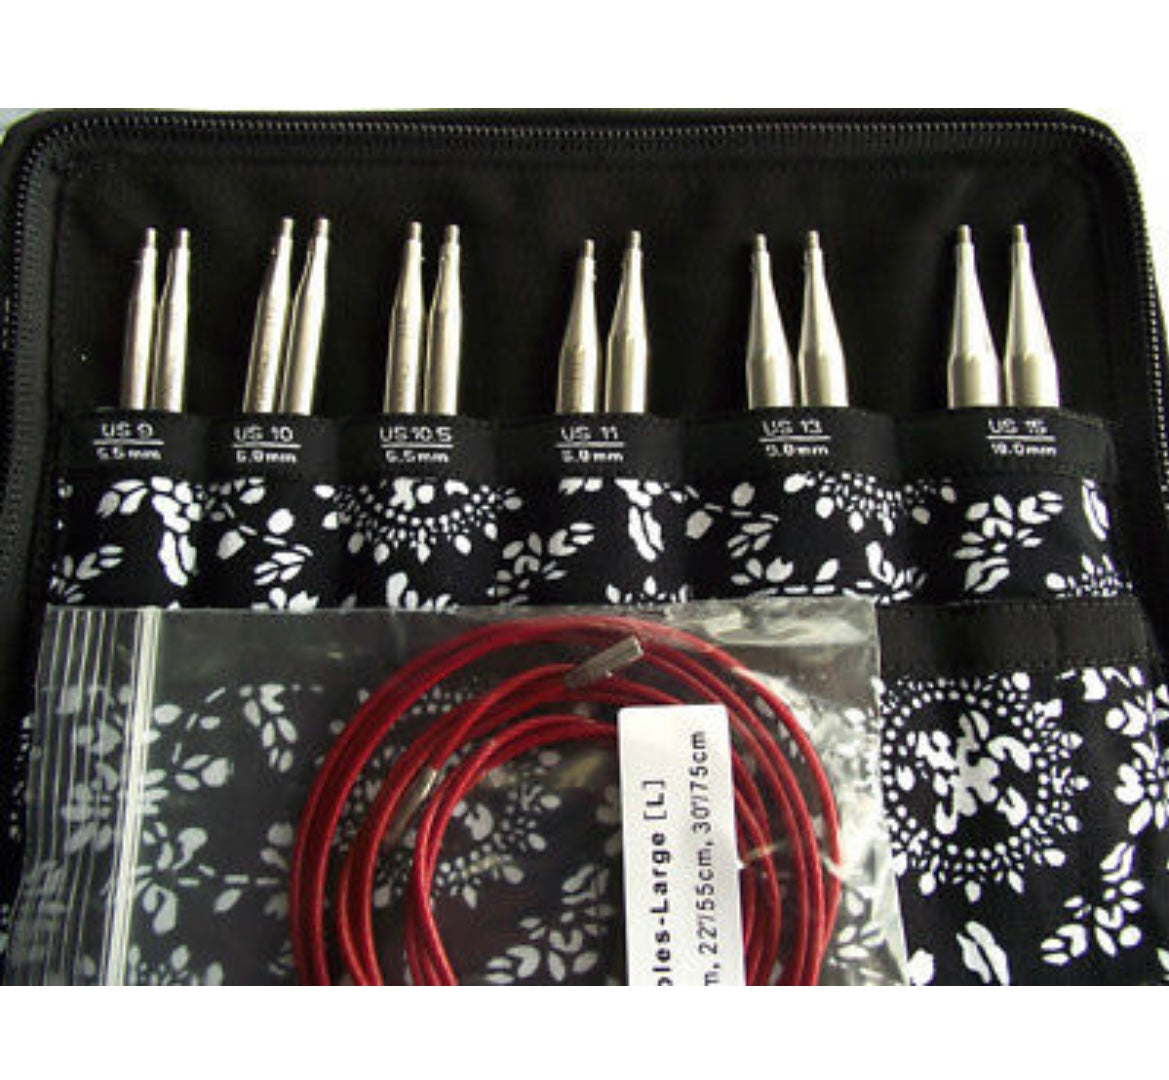 ChiaoGoo - 5 TWIST Interchangeable Needle Set Red Lace Large US 9